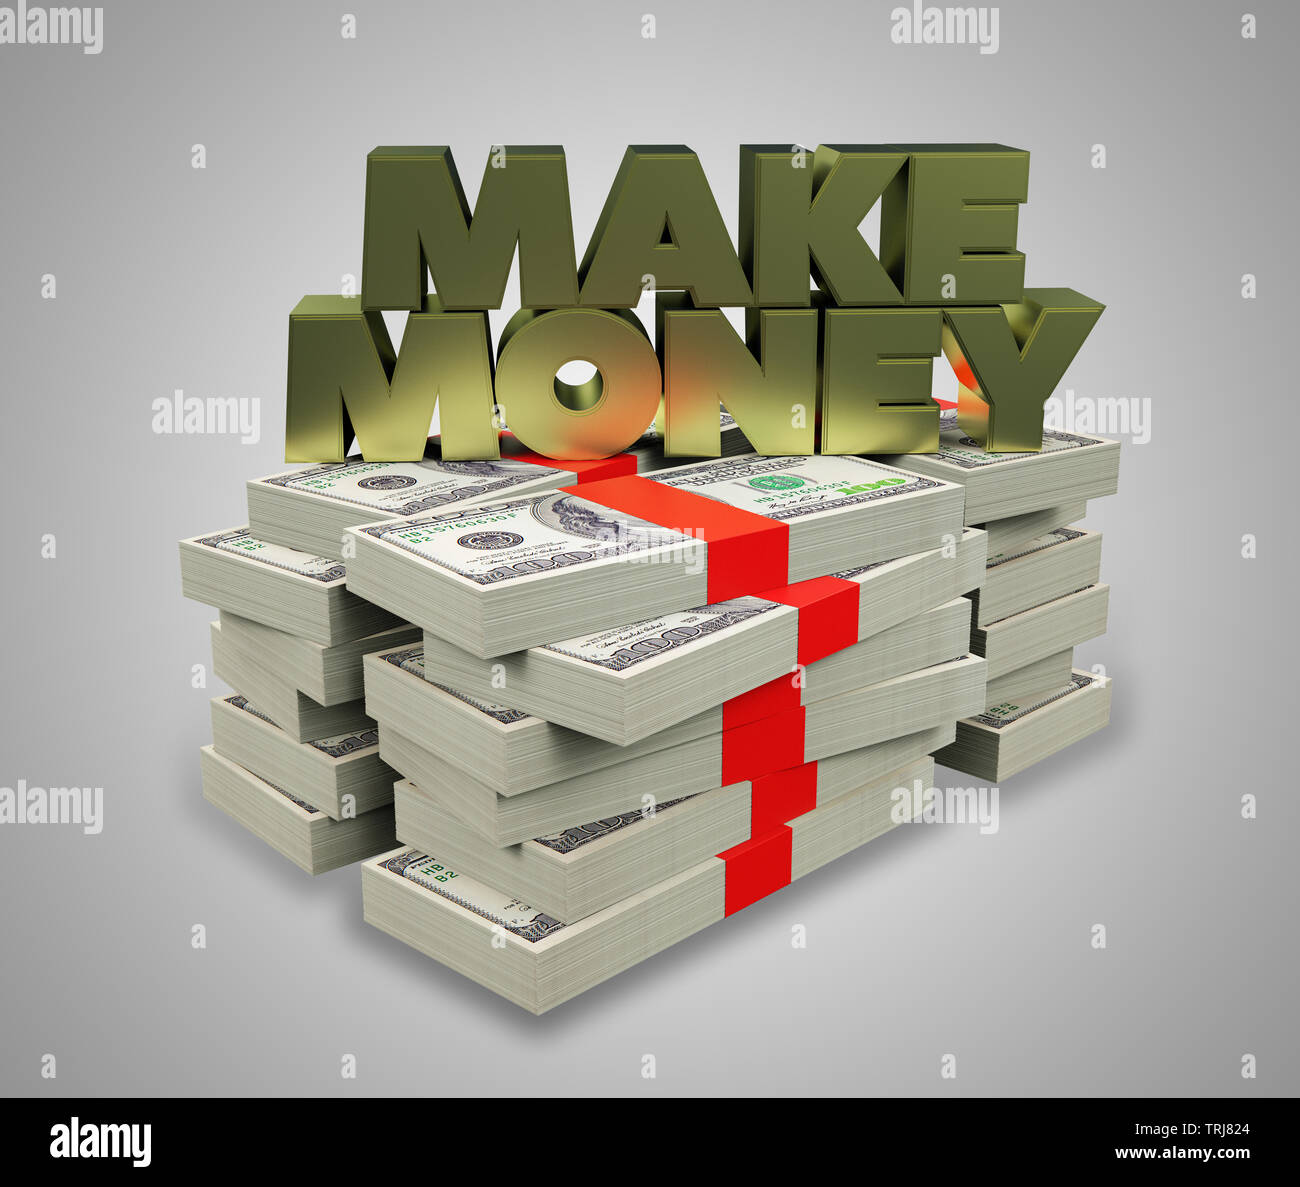 Make money golden text on pile of money Stock Photo